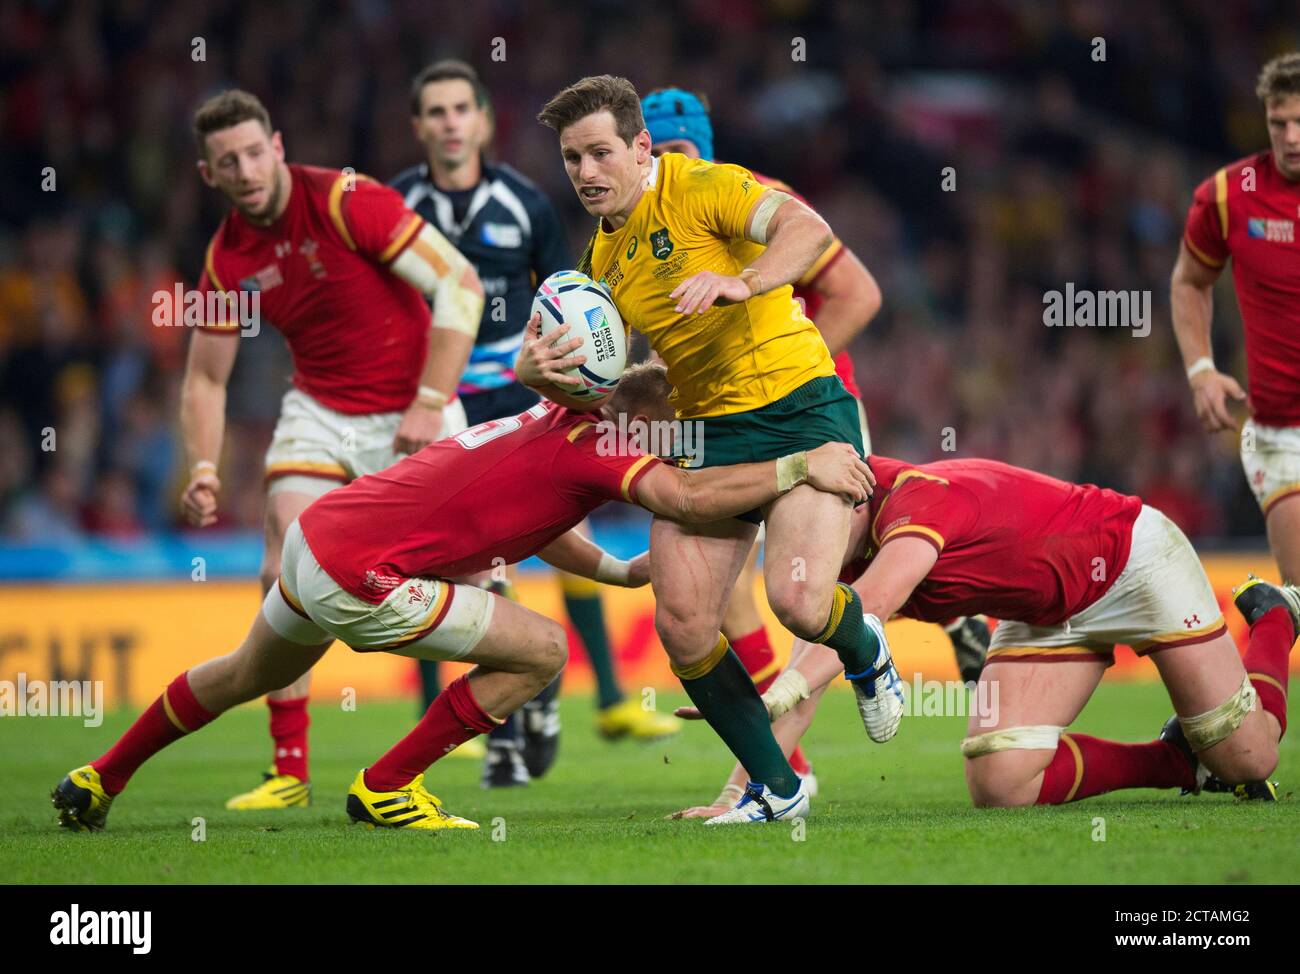 Bernard Foley Anklagen bei der Welsh Defense Australien gegen Wales Rugby World Cup 2015 Bildquelle: MARK PAIN / ALAMY Stockfoto